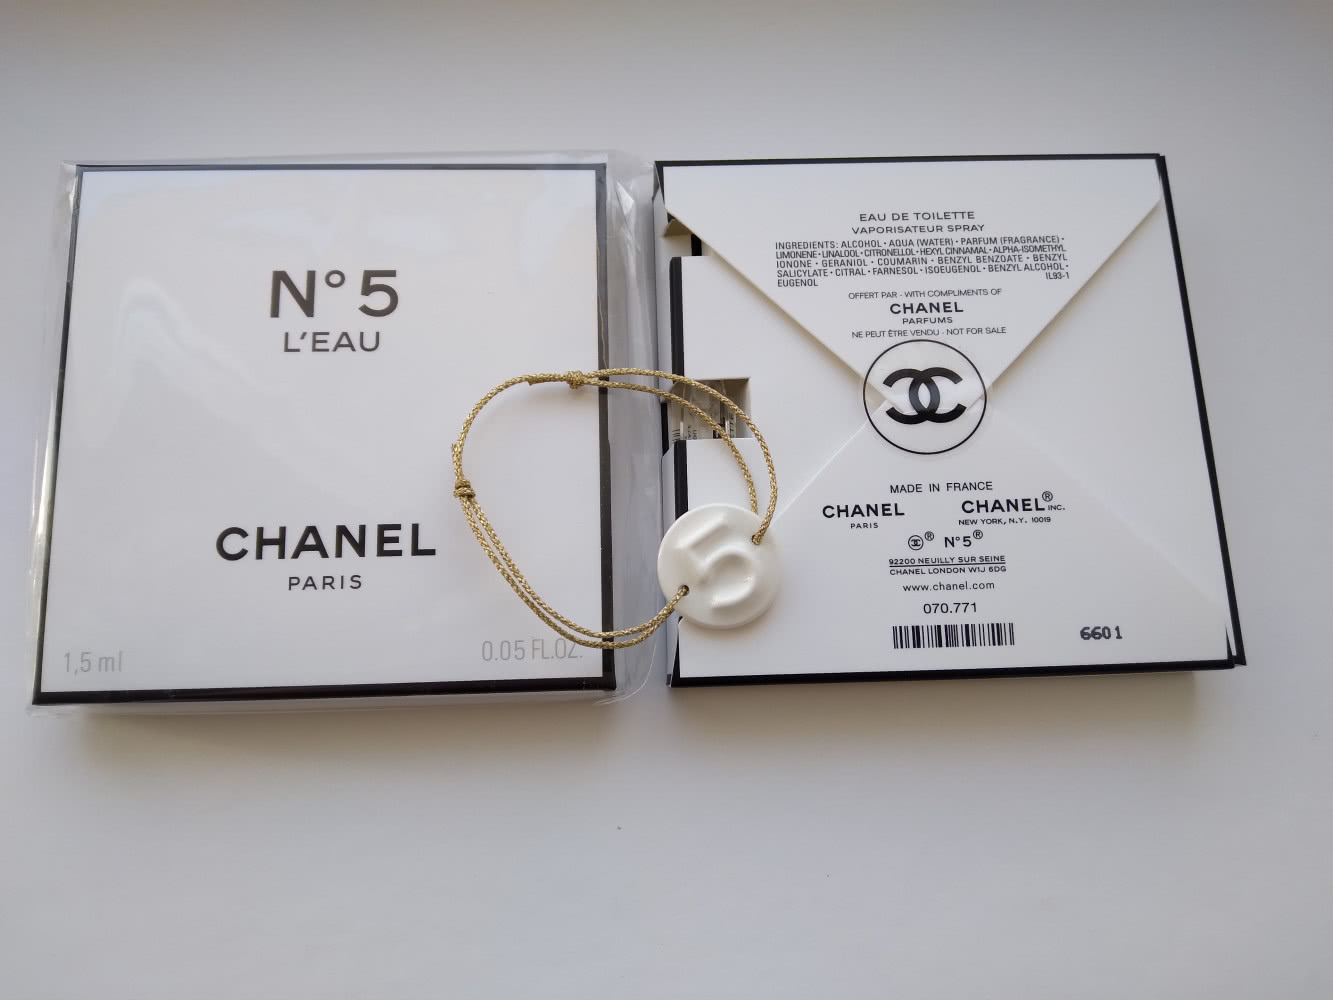 Chanel no 5 L'eau 1.5 ml с браслетом